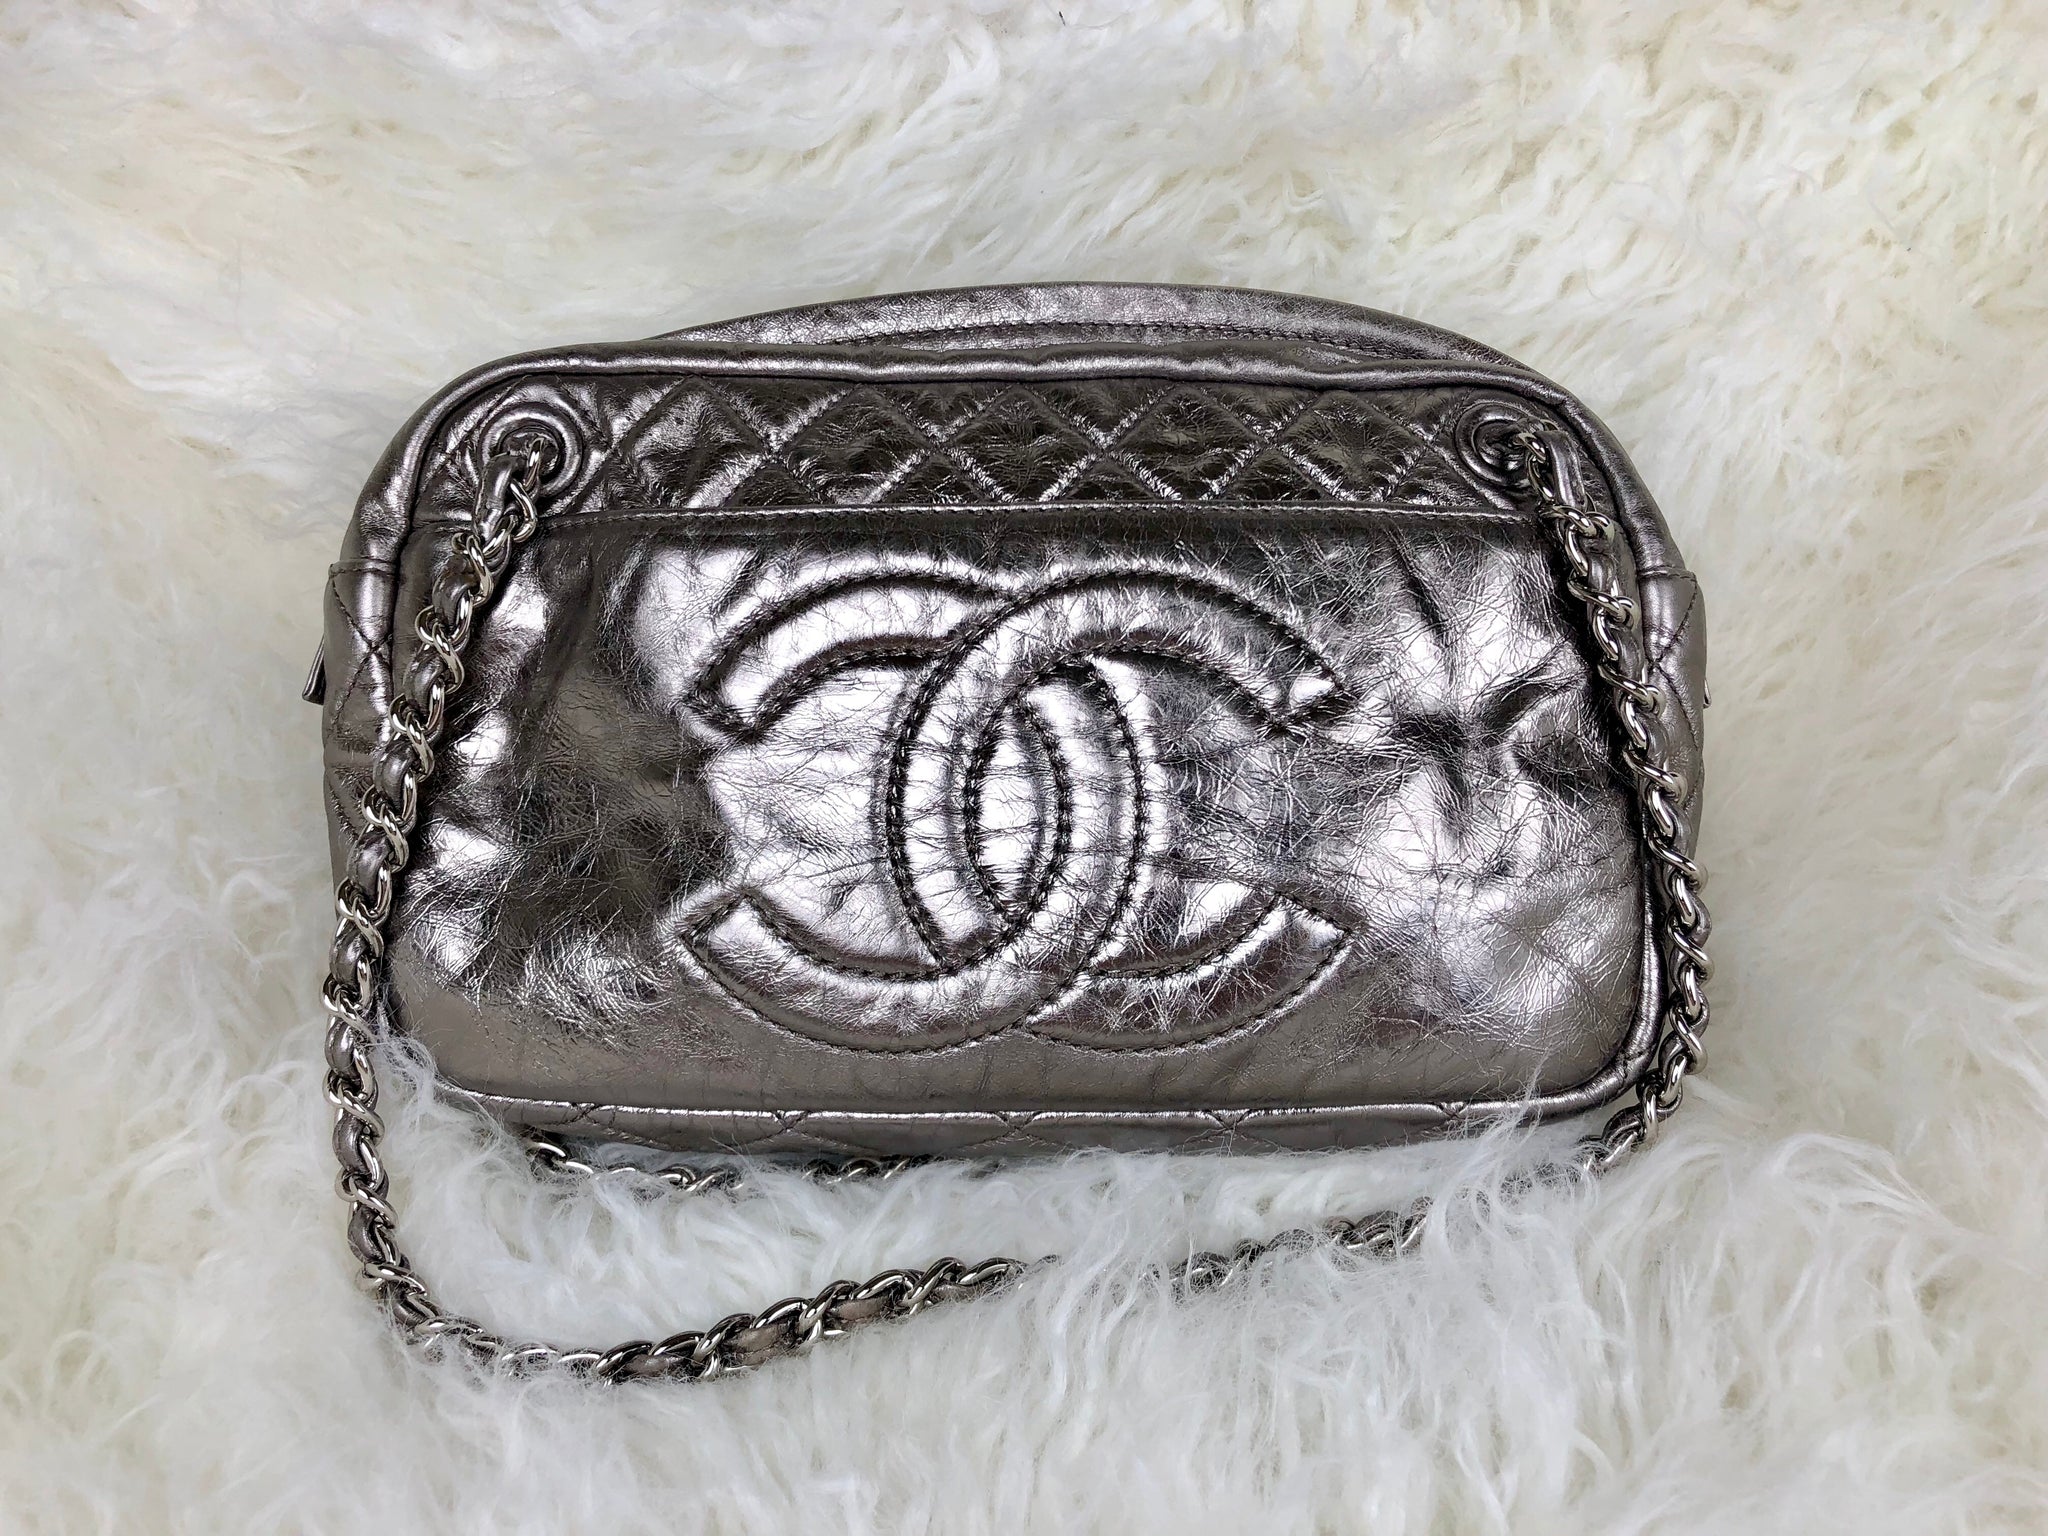 CHANEL Metallic Silver Handbag